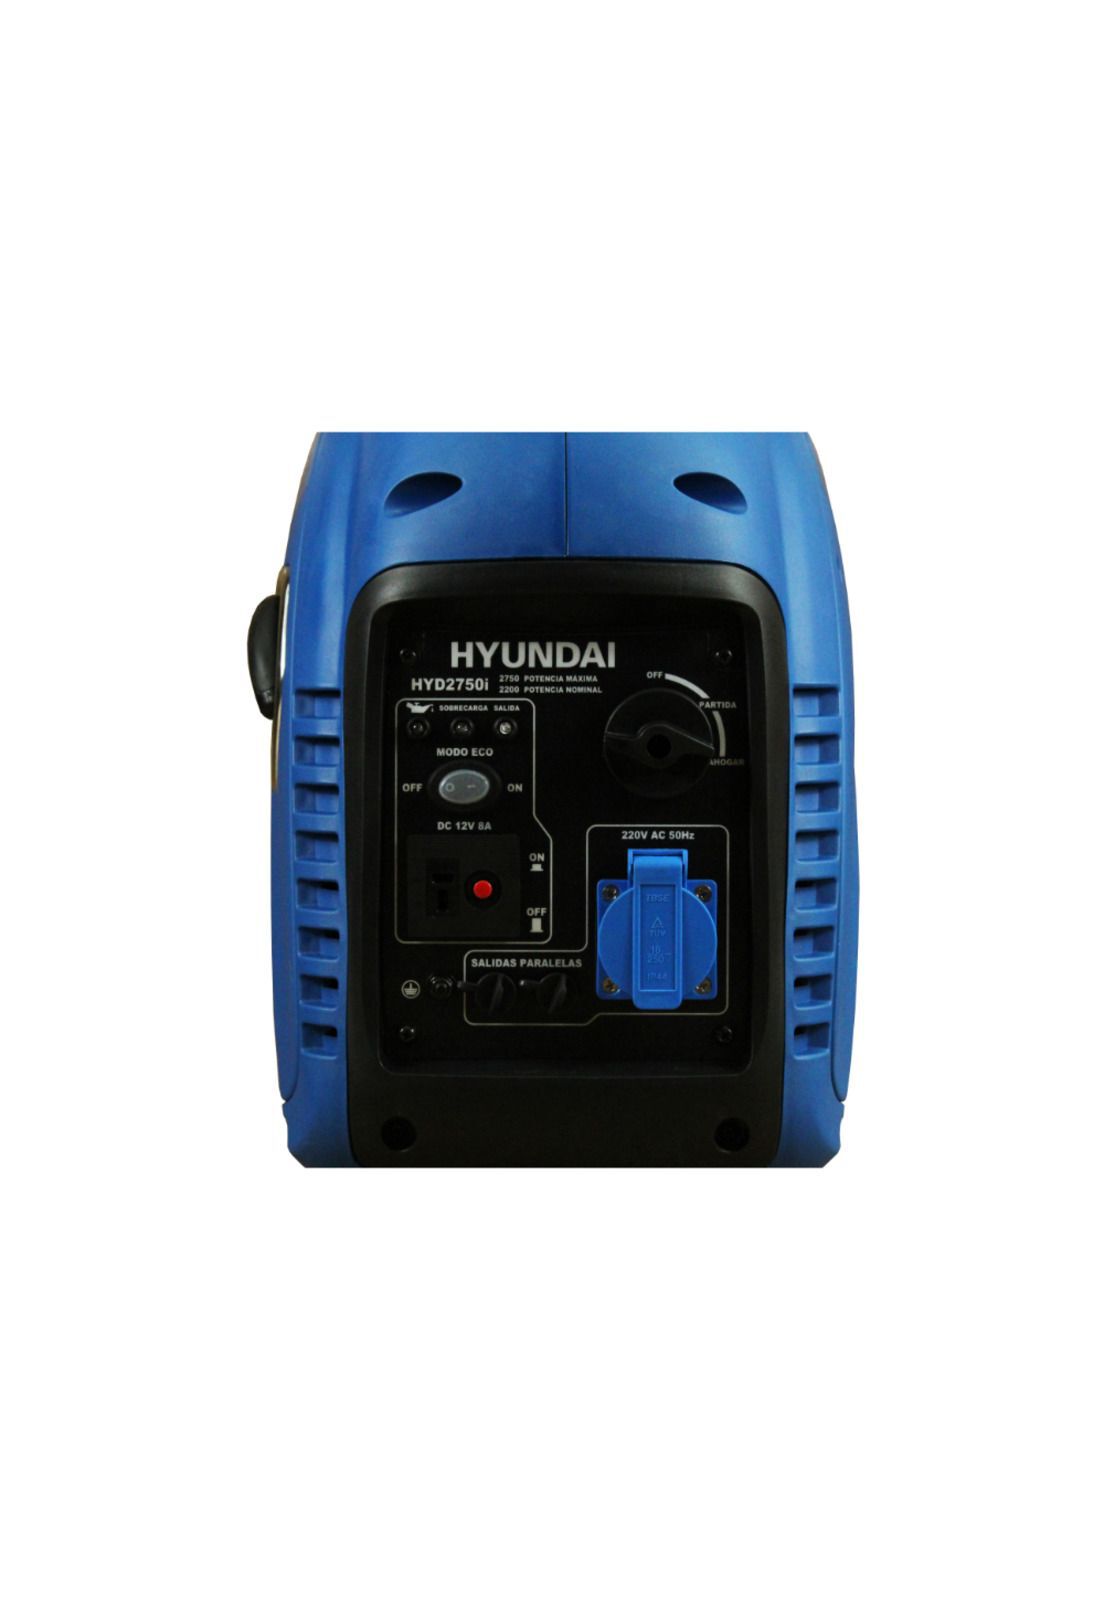 Generador Inverter digital Hyundai gasolina 2,2/2,75 kw Partida manual –  Sustenergy